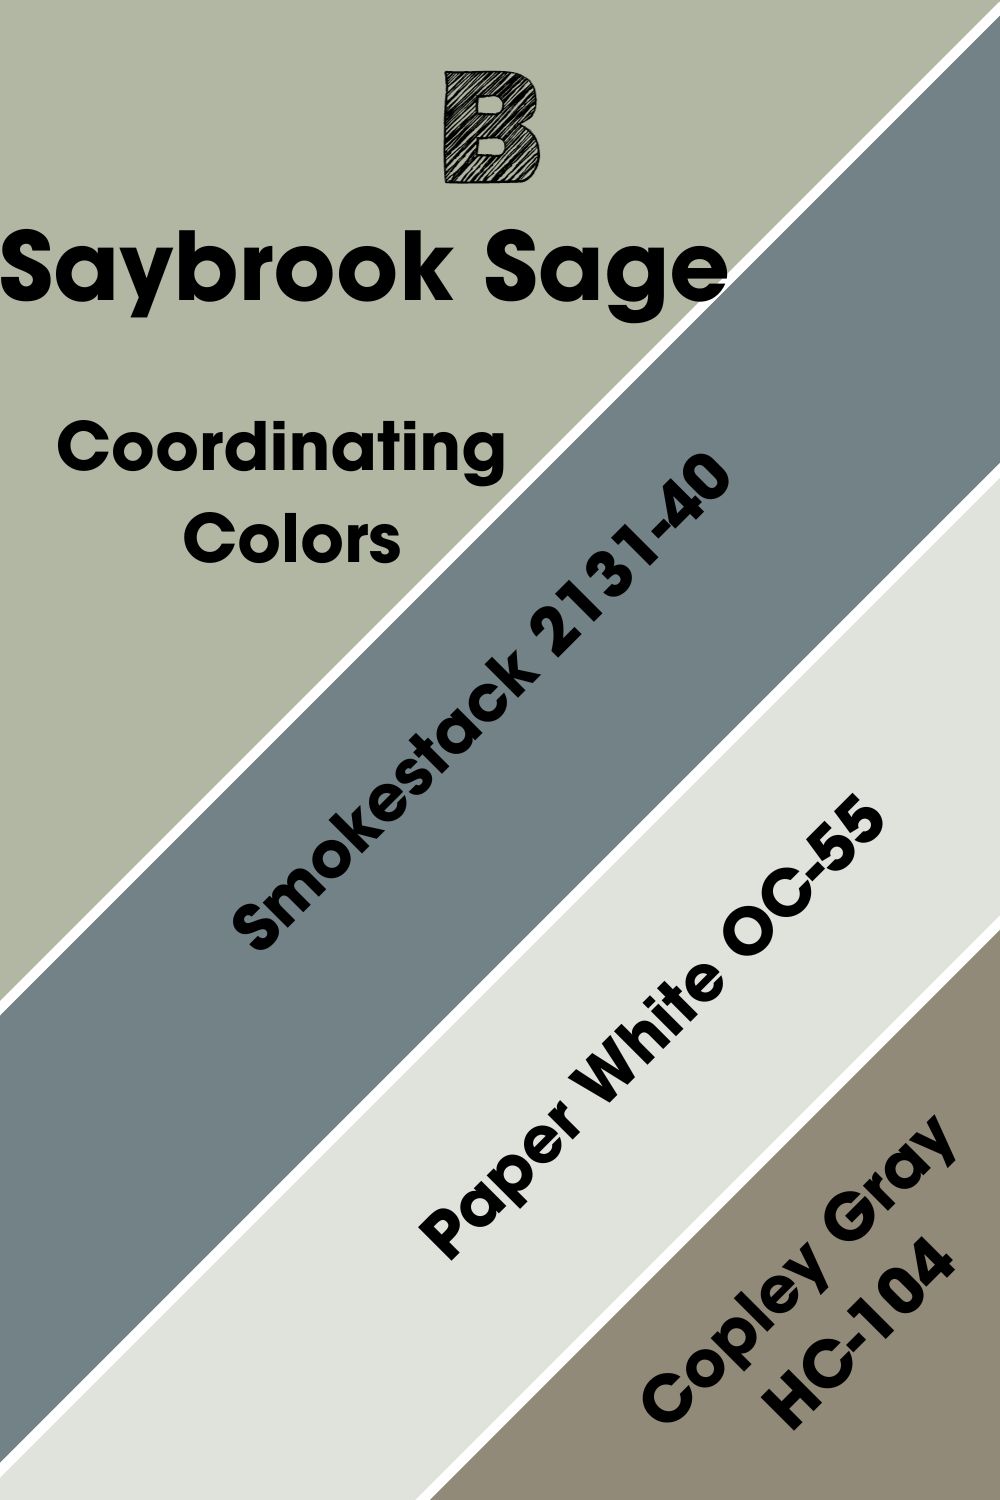 Benjamin Moore Saybrook Sage Coordinating Colors